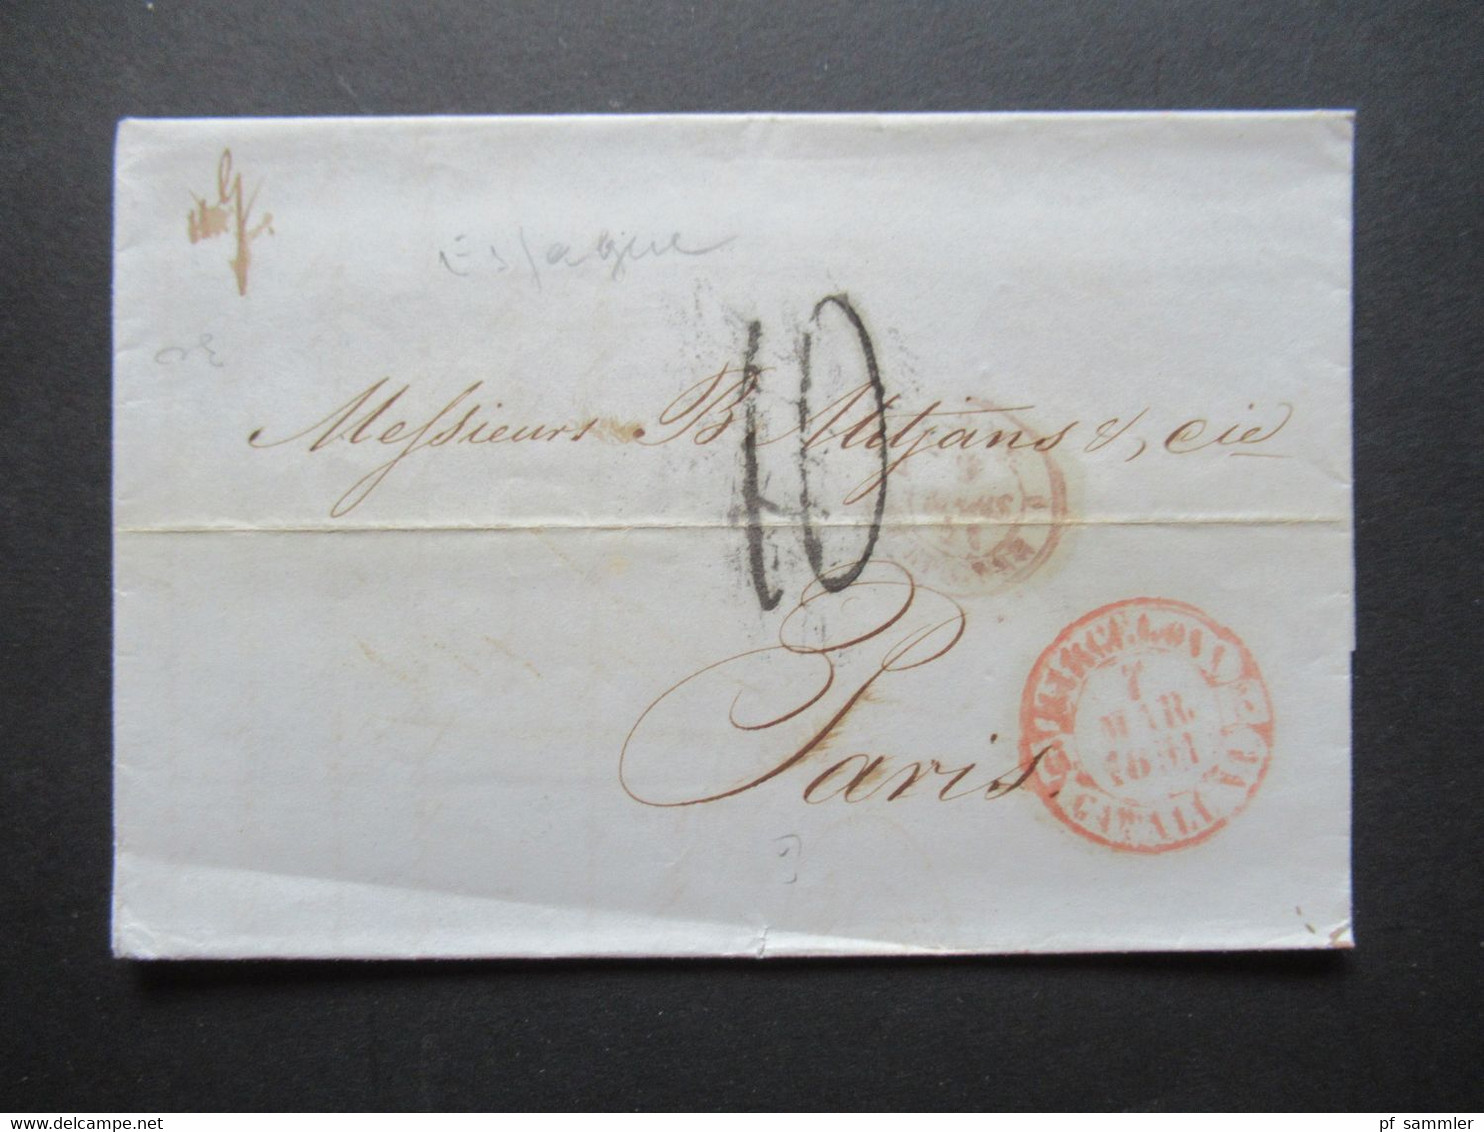 Spanien 1851 Faltbrief Mit Inhalt /Auslandsbrief Barcelona - Paris Roter K2 Barcelona Cataluna Taxstempel / Chiffre Taxe - Covers & Documents